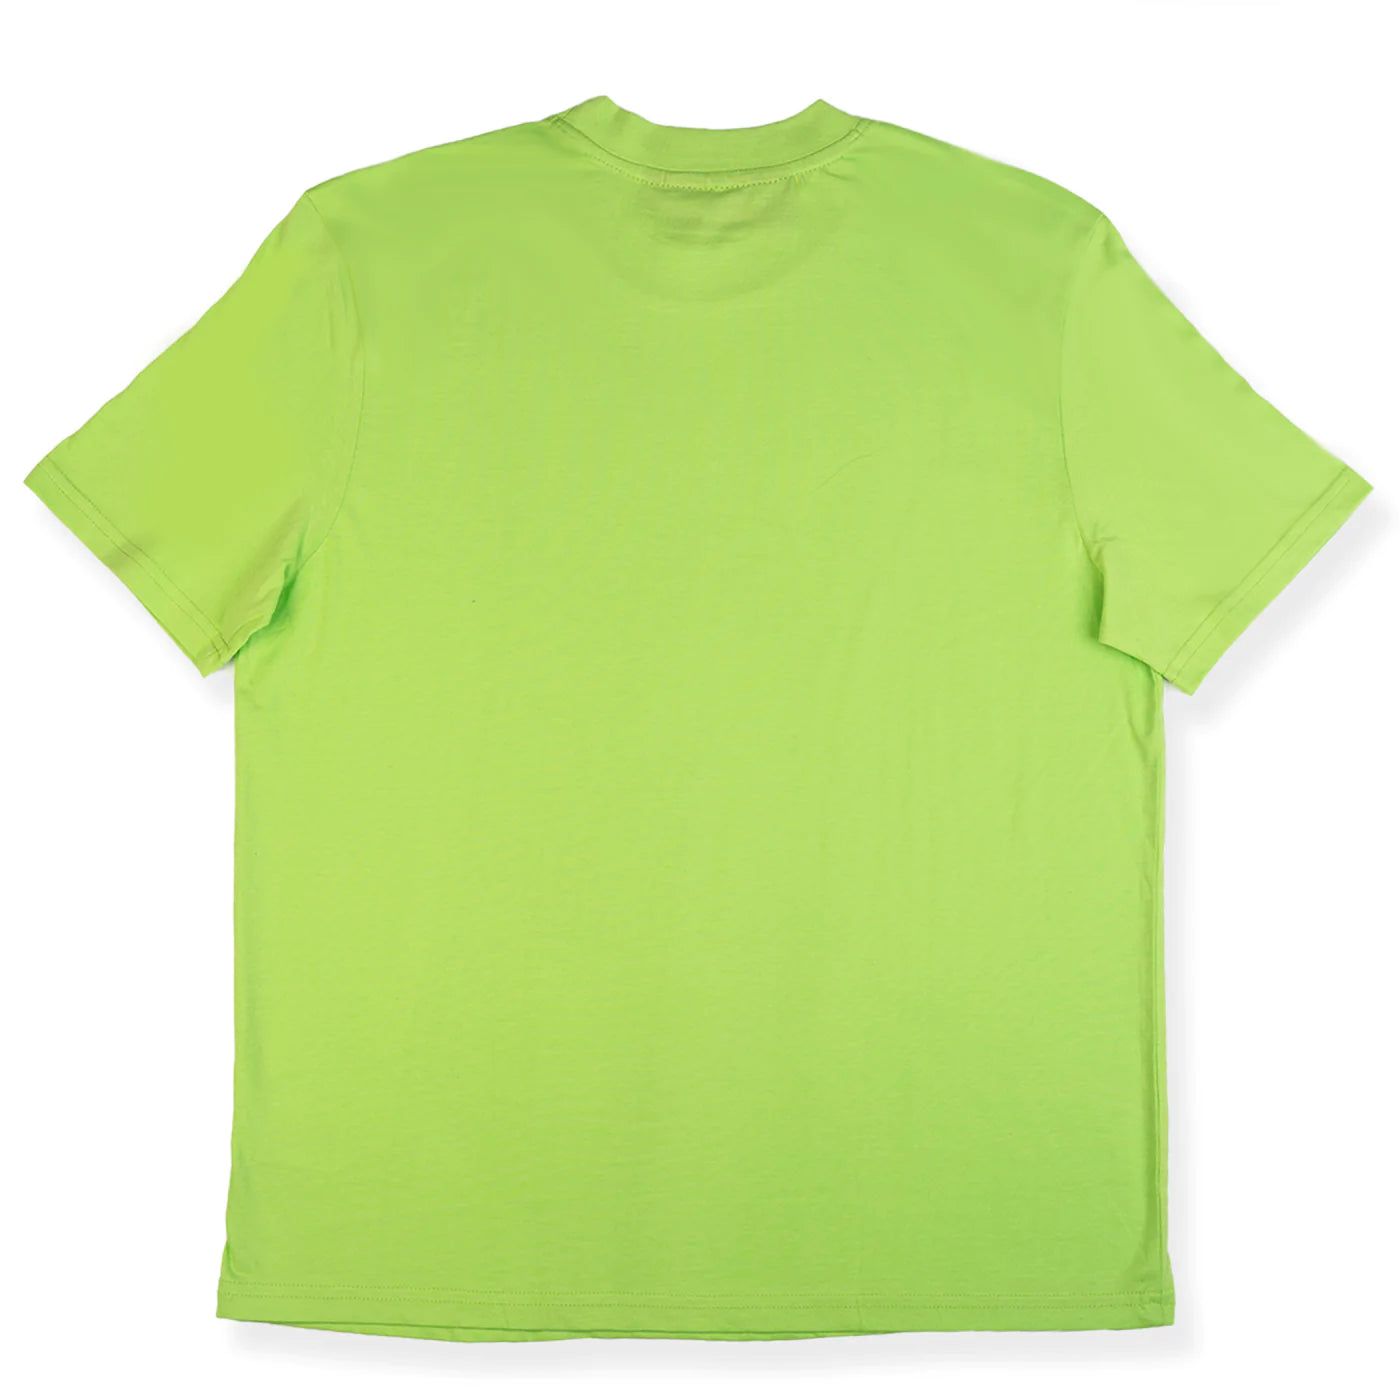 Halo Effect Basic Neon T-Shirt